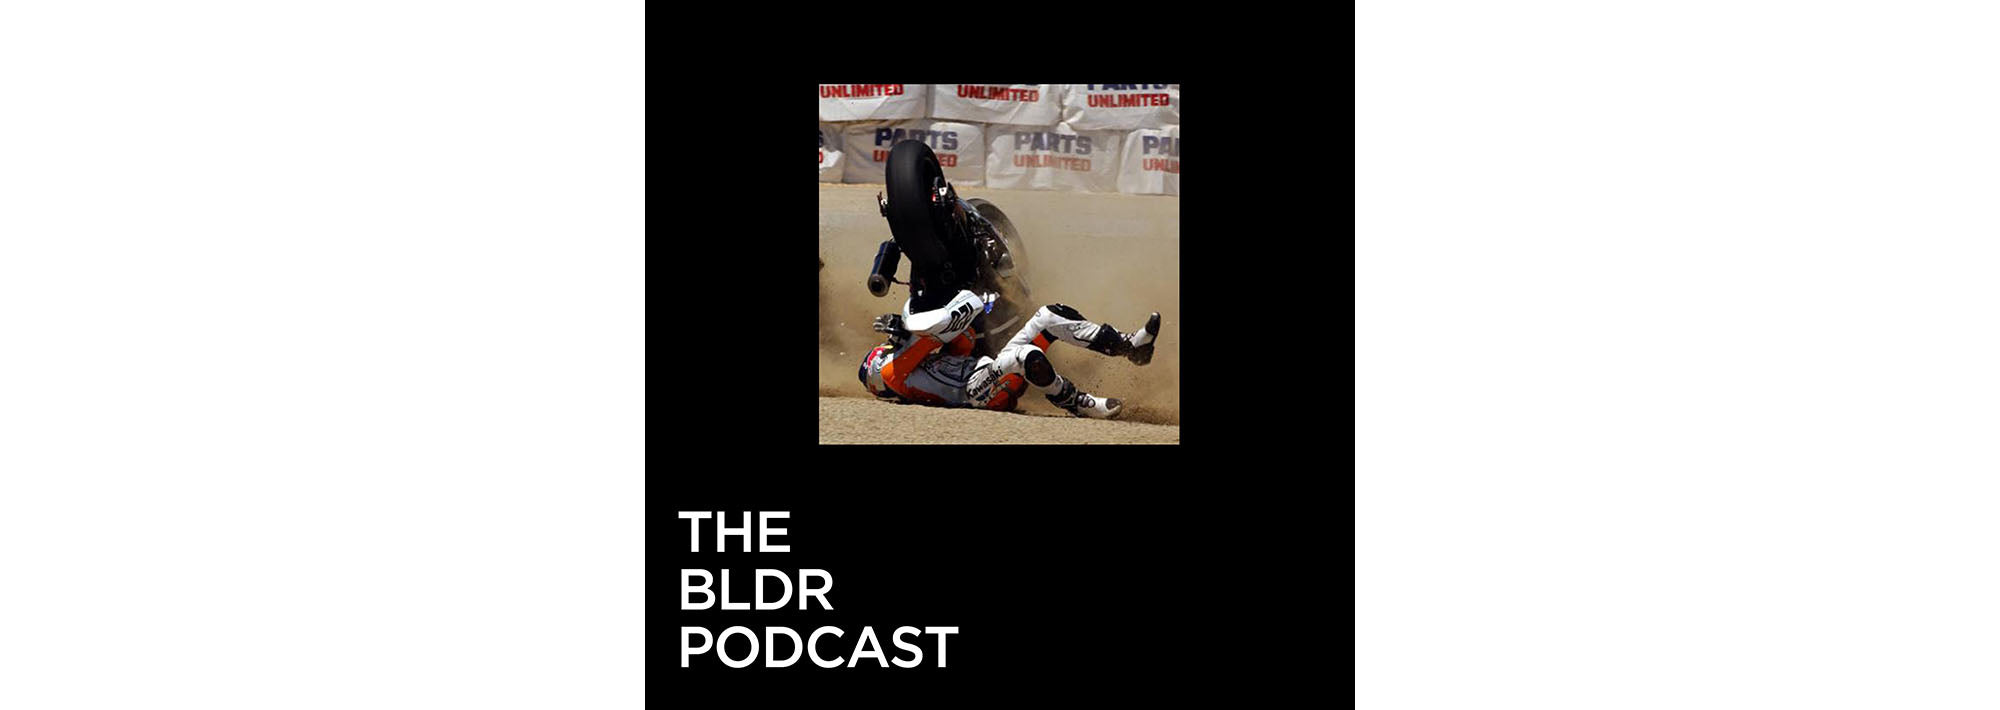 BLDR Podcast - Eric Bostrom "Breaking Bones & Speed Records"